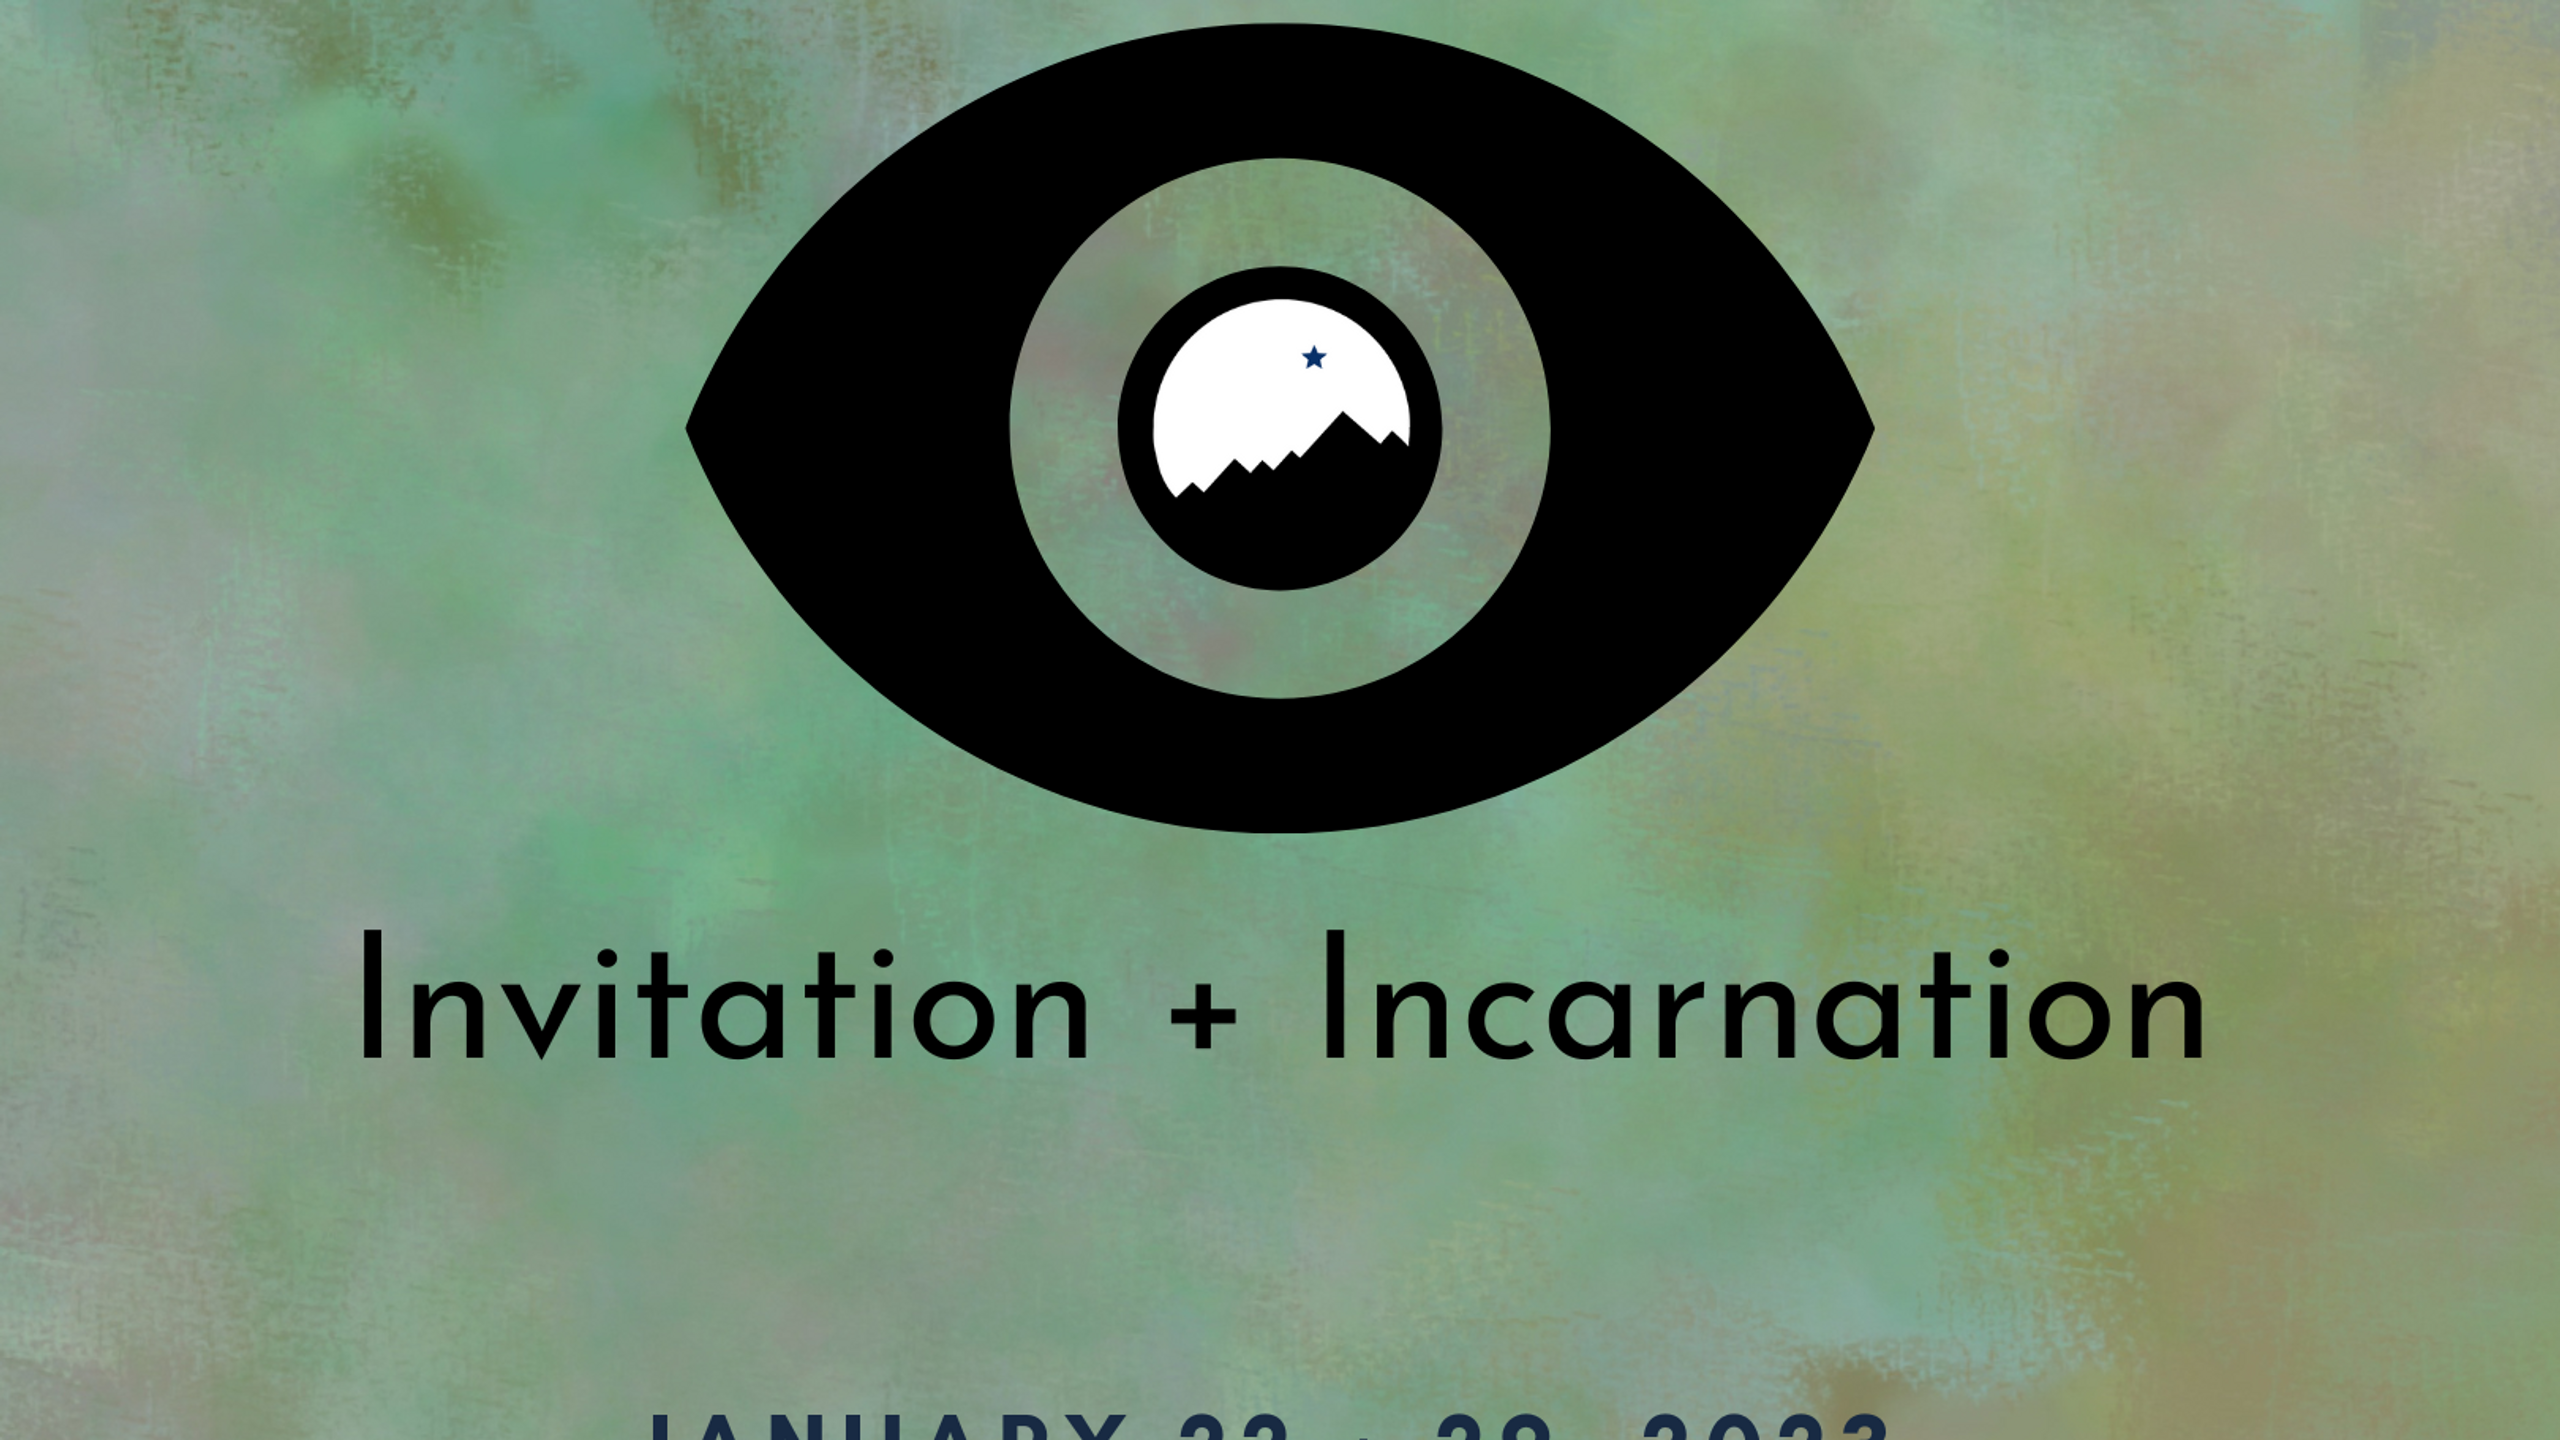 20/40 Vision: Invitation + Incarnation